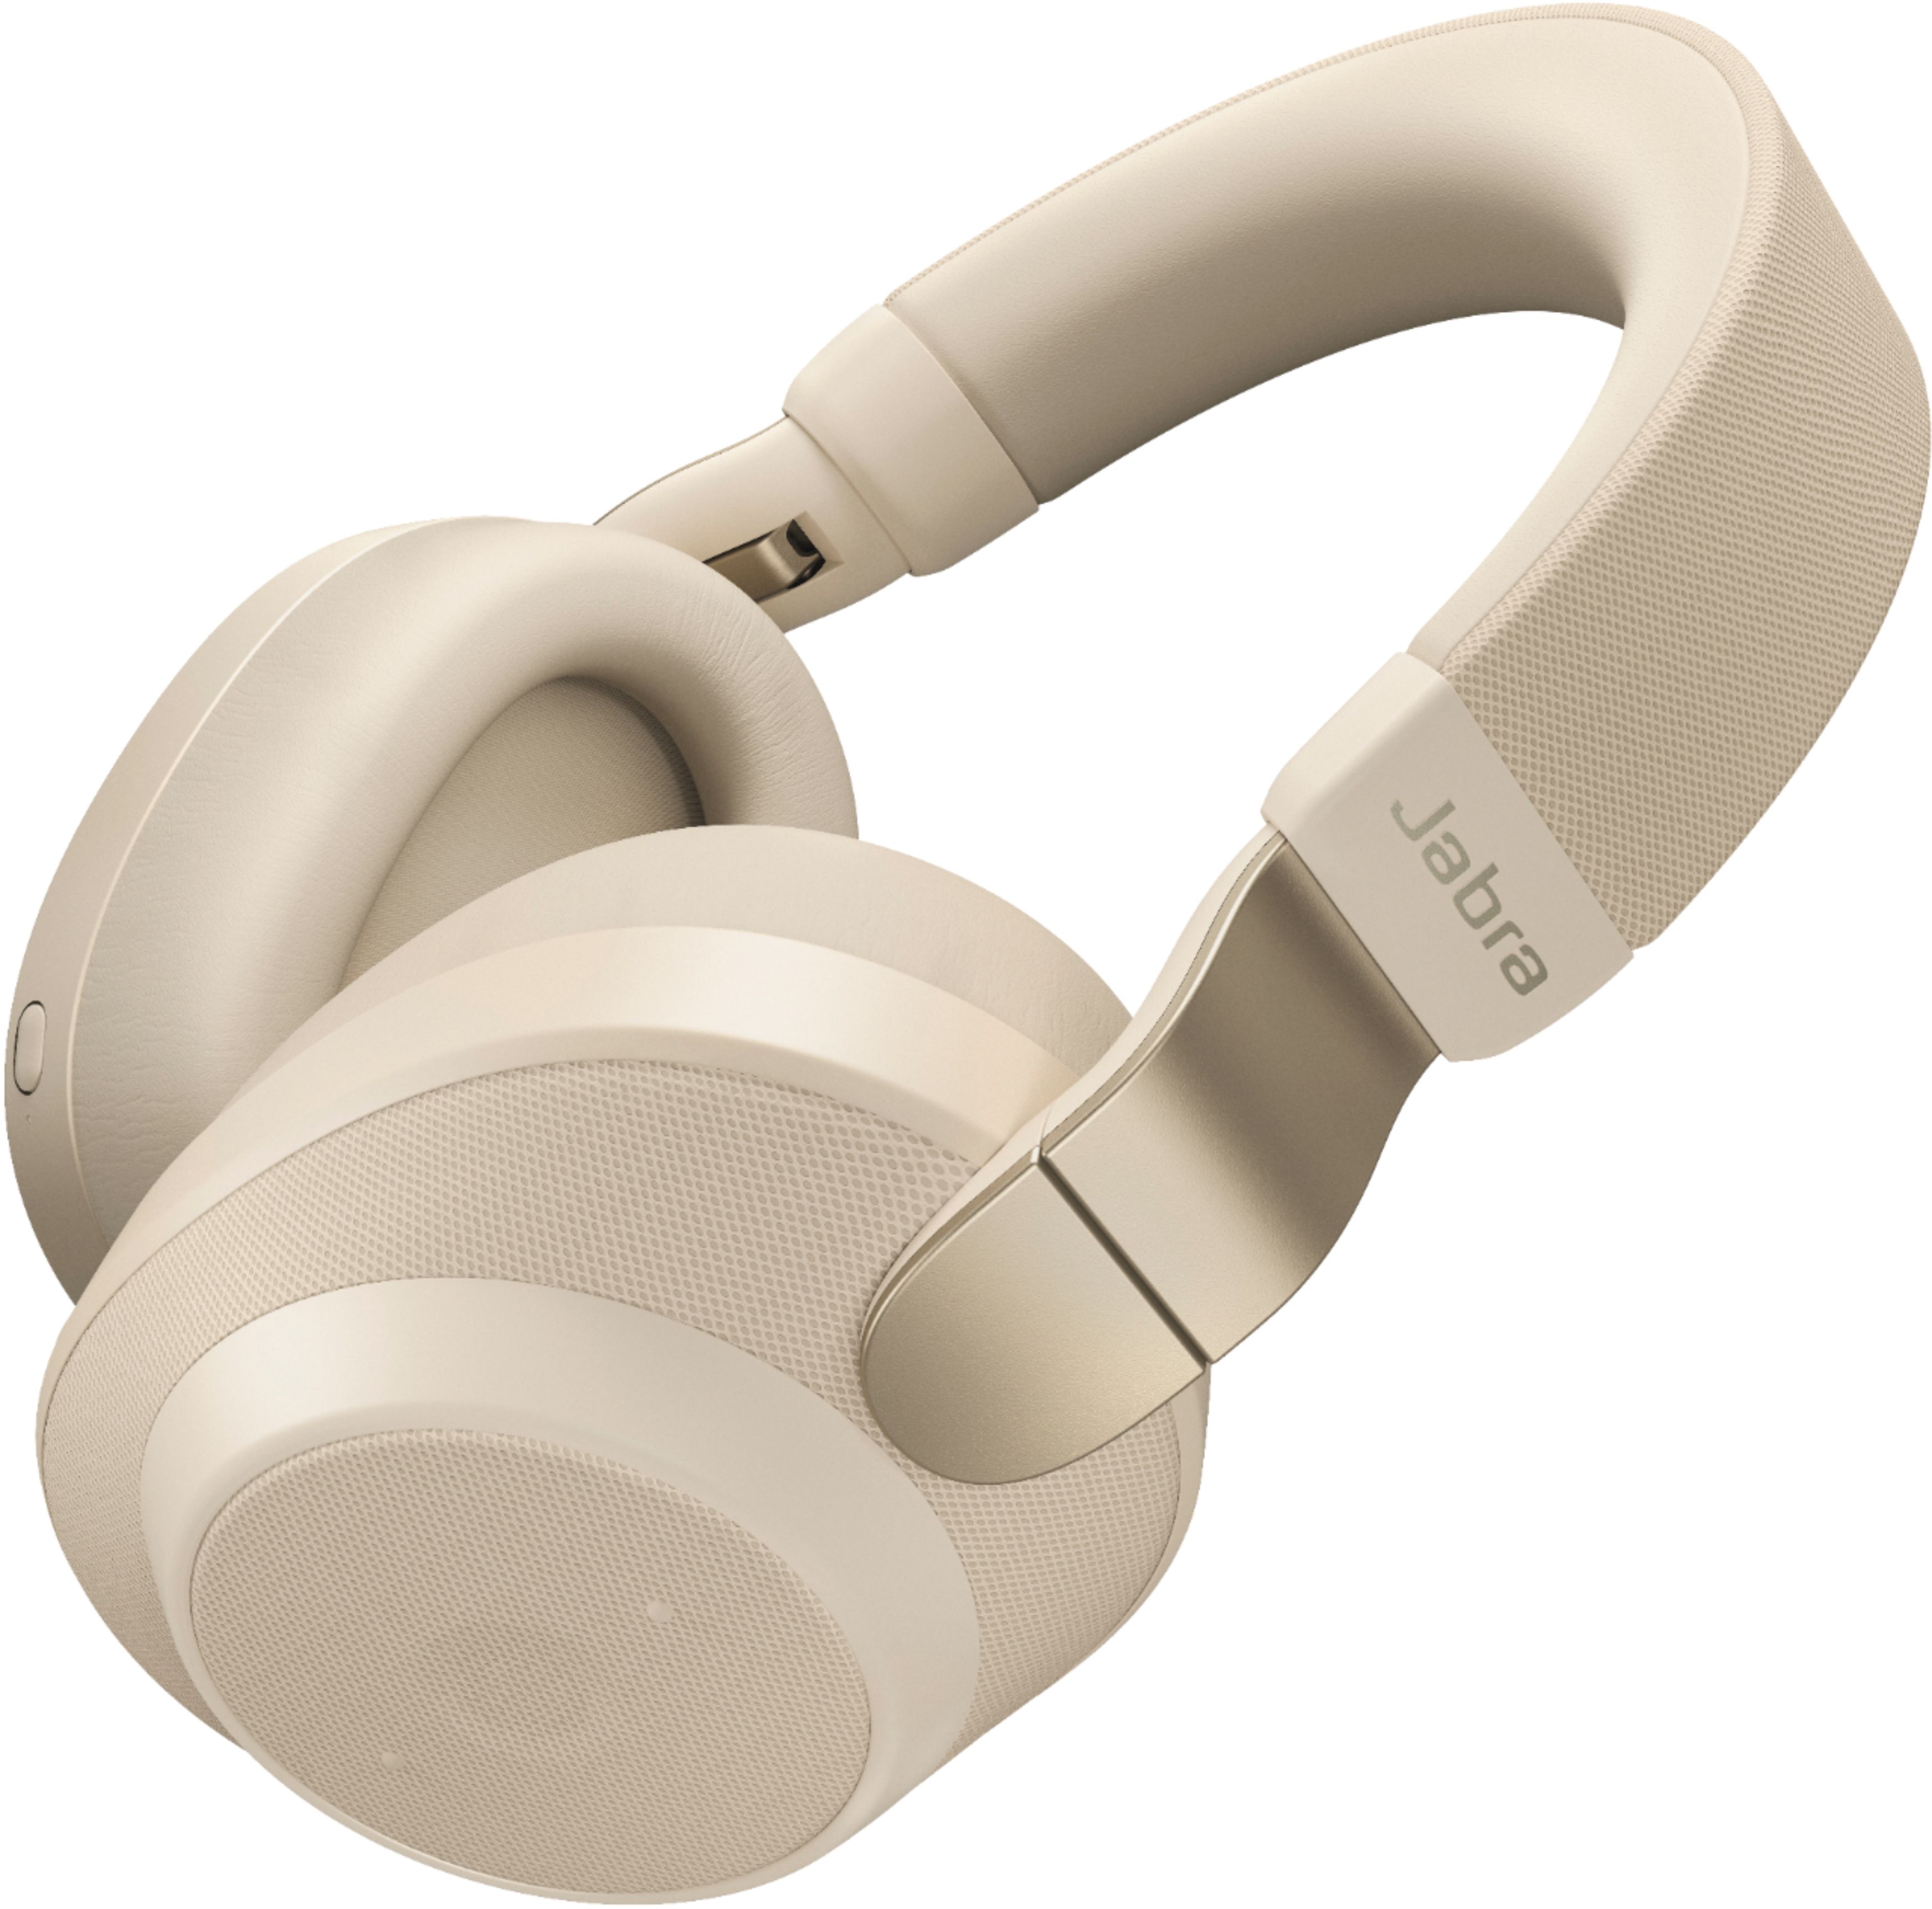 Best Buy: Jabra Elite 85h Wireless Noise Cancelling Over-the-Ear 